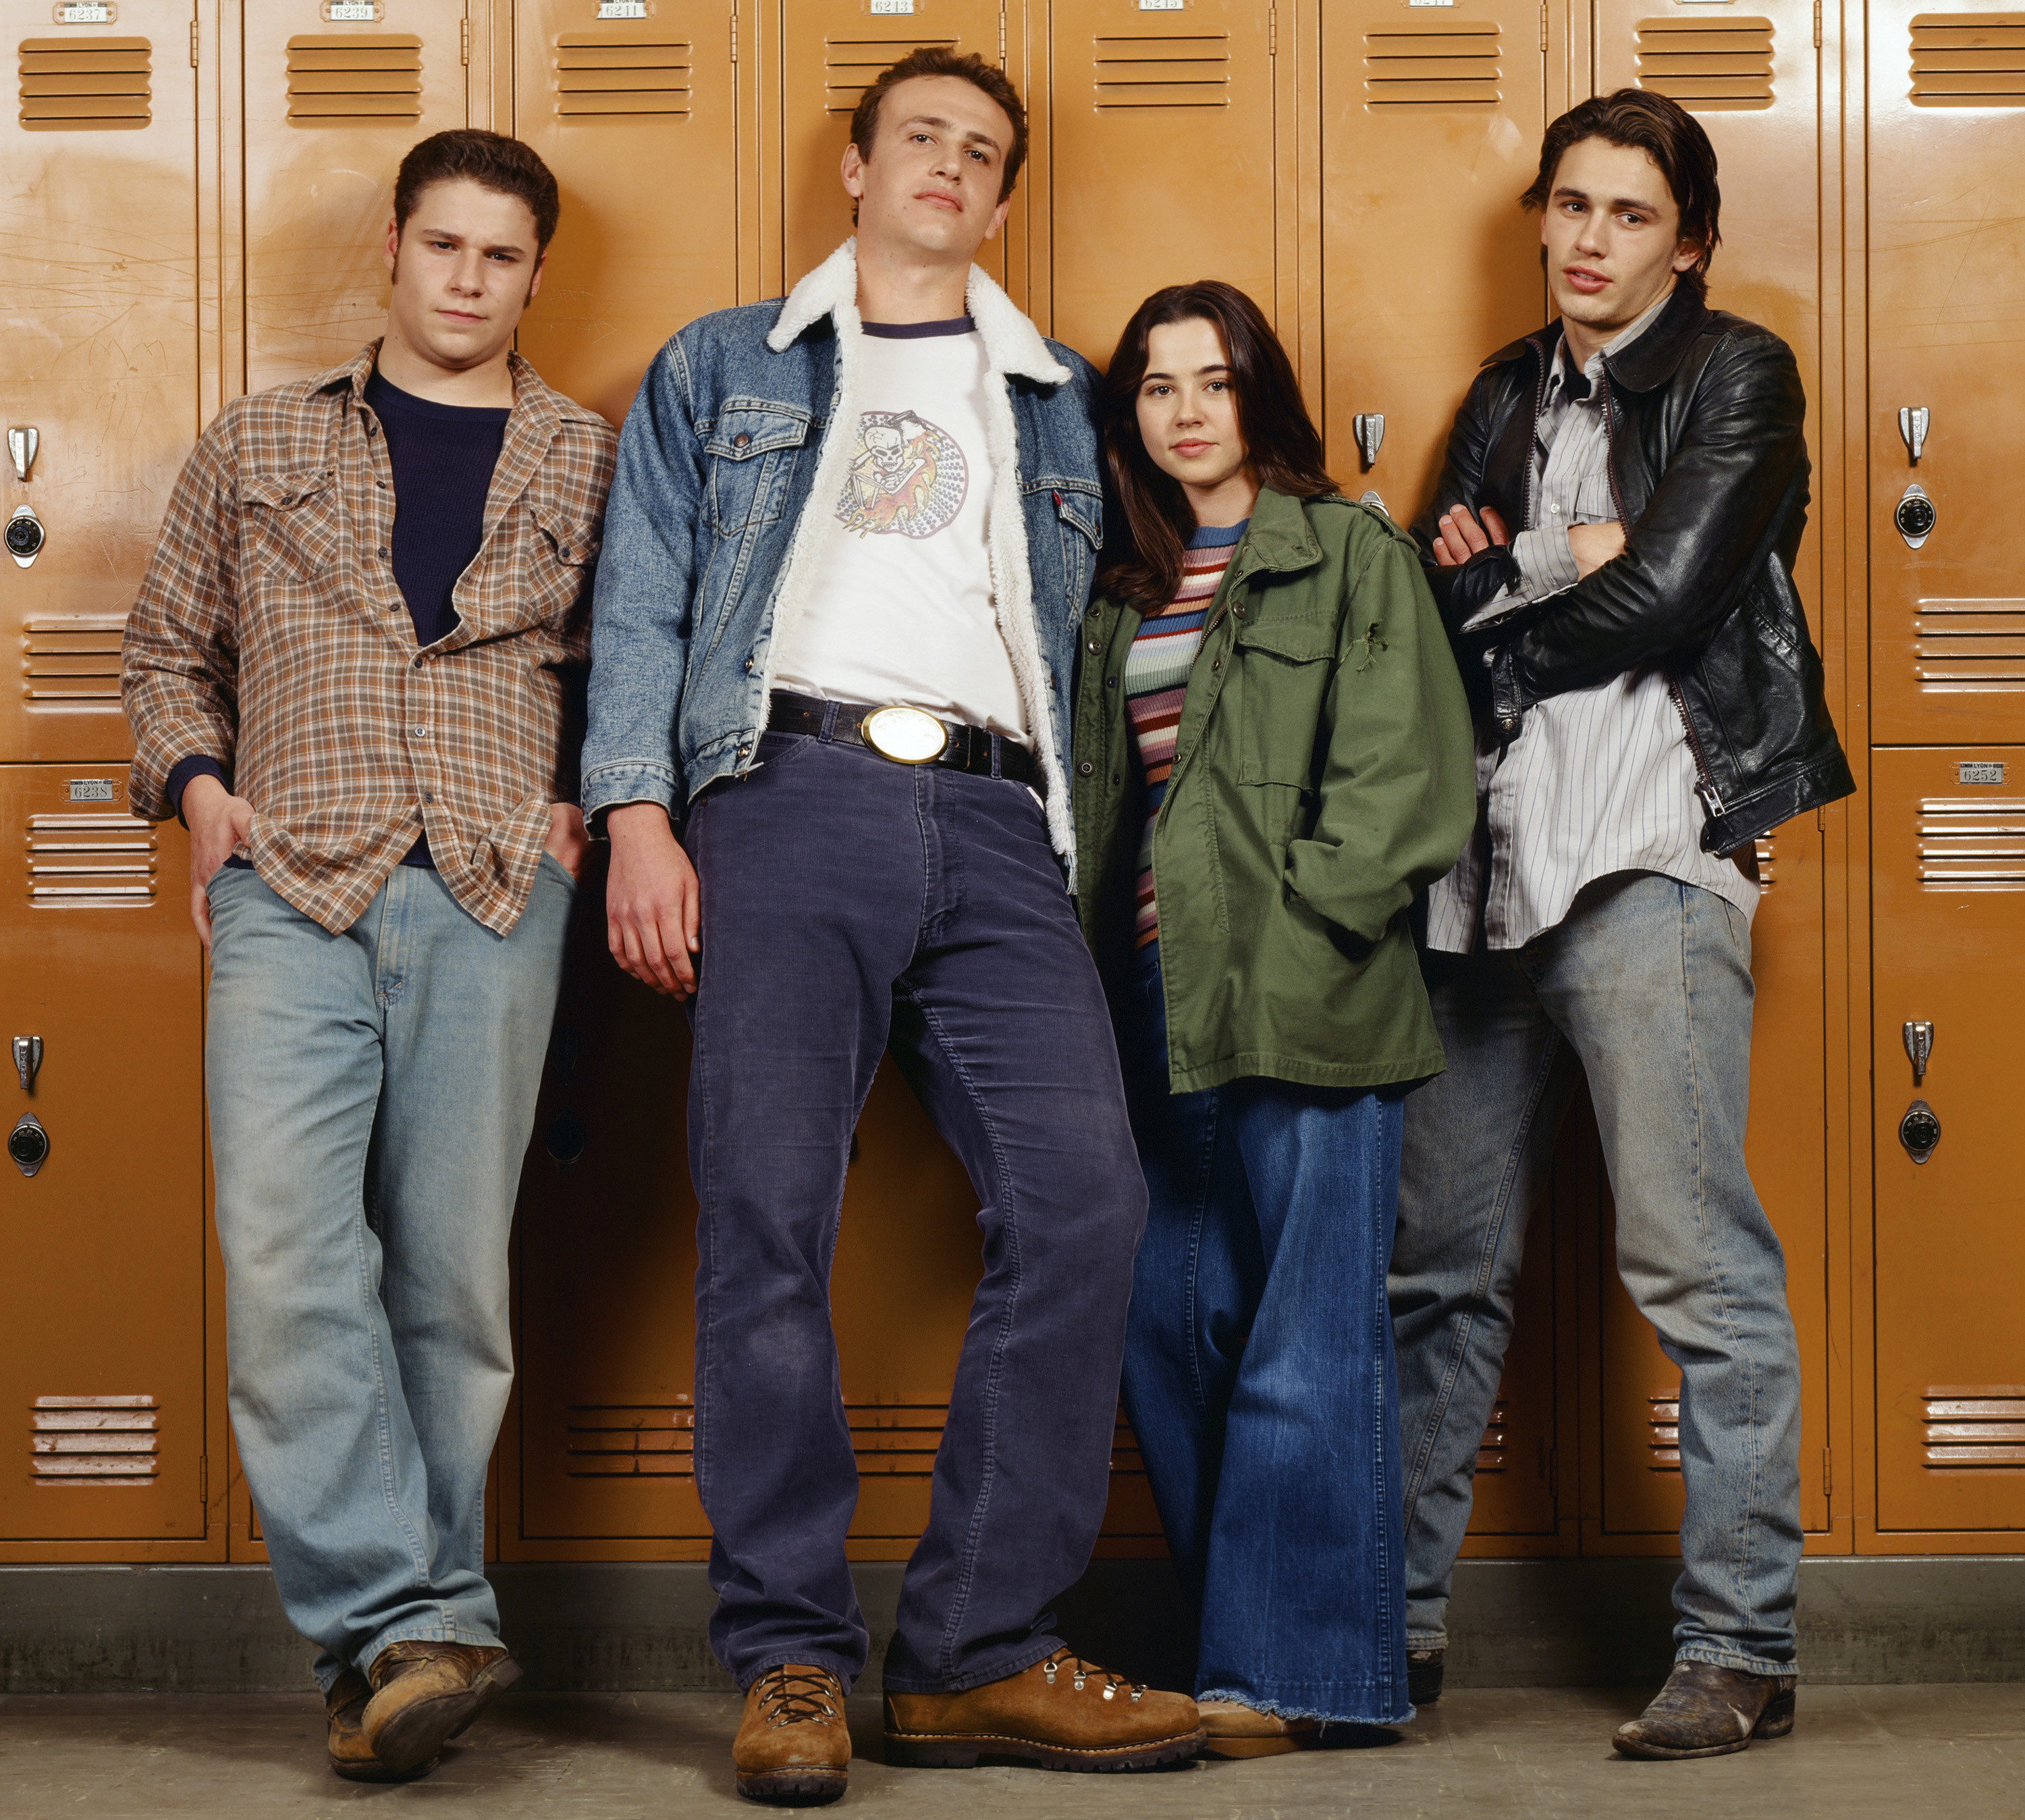 Teenagers in jeans slouched against school lockers